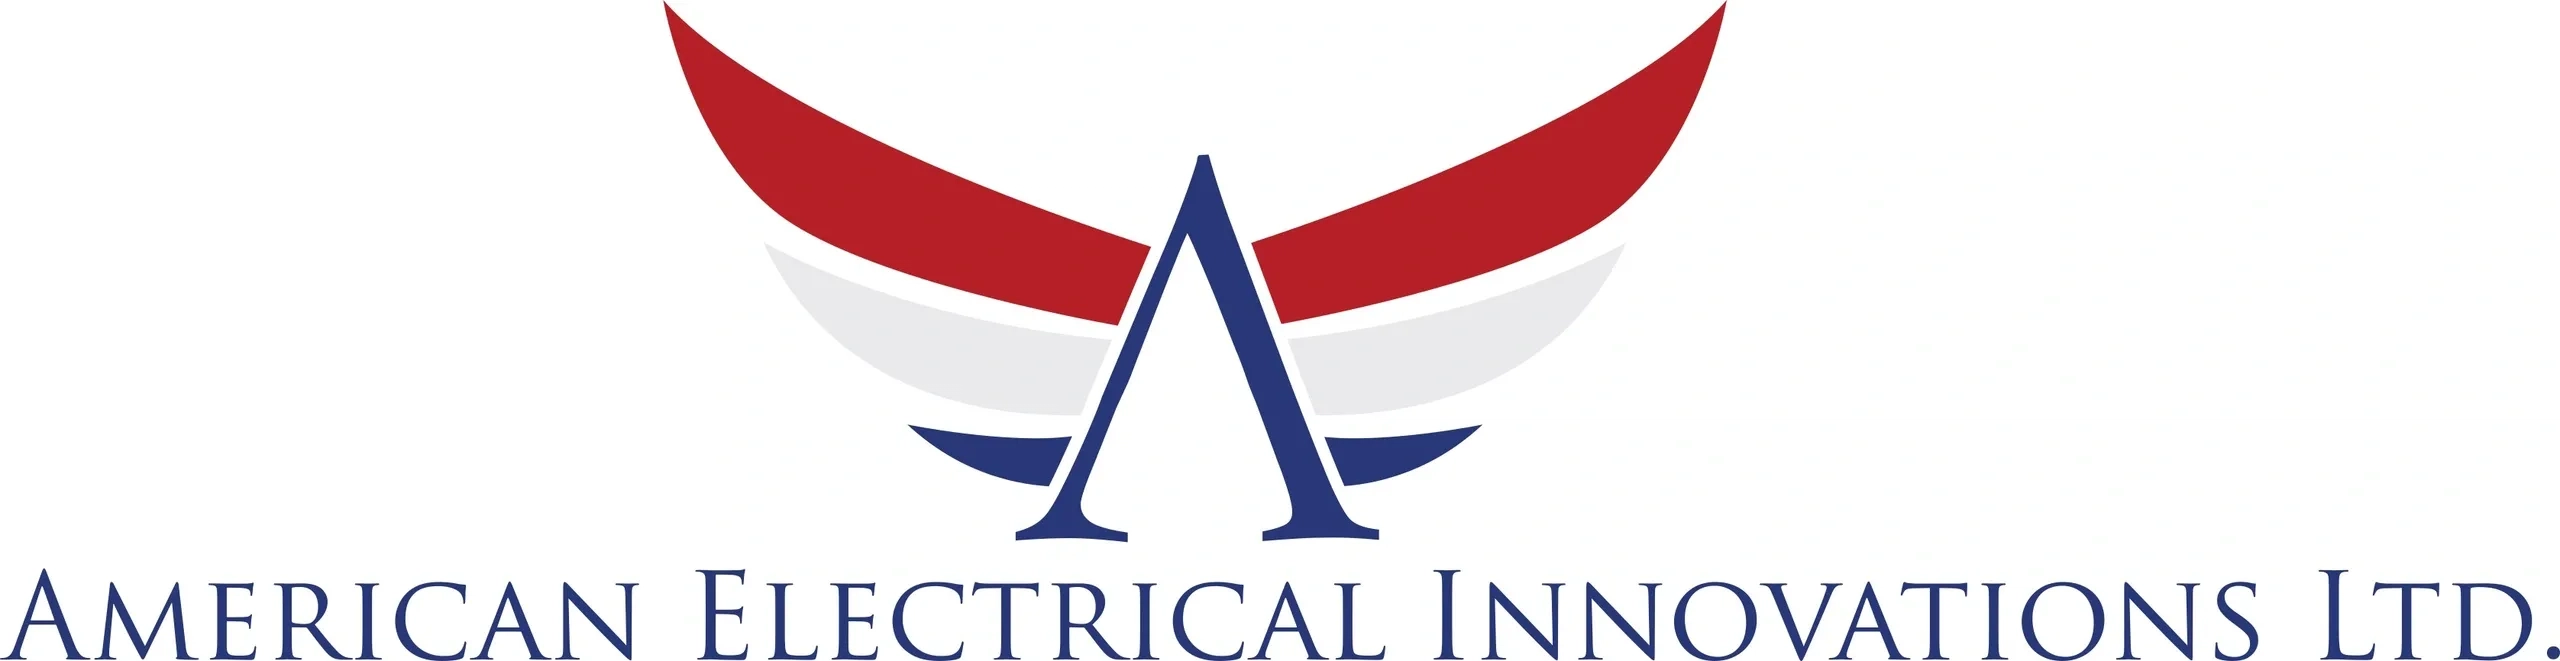 AMERICAN ELECTRICAL INNOVATIONS LTD. Logo